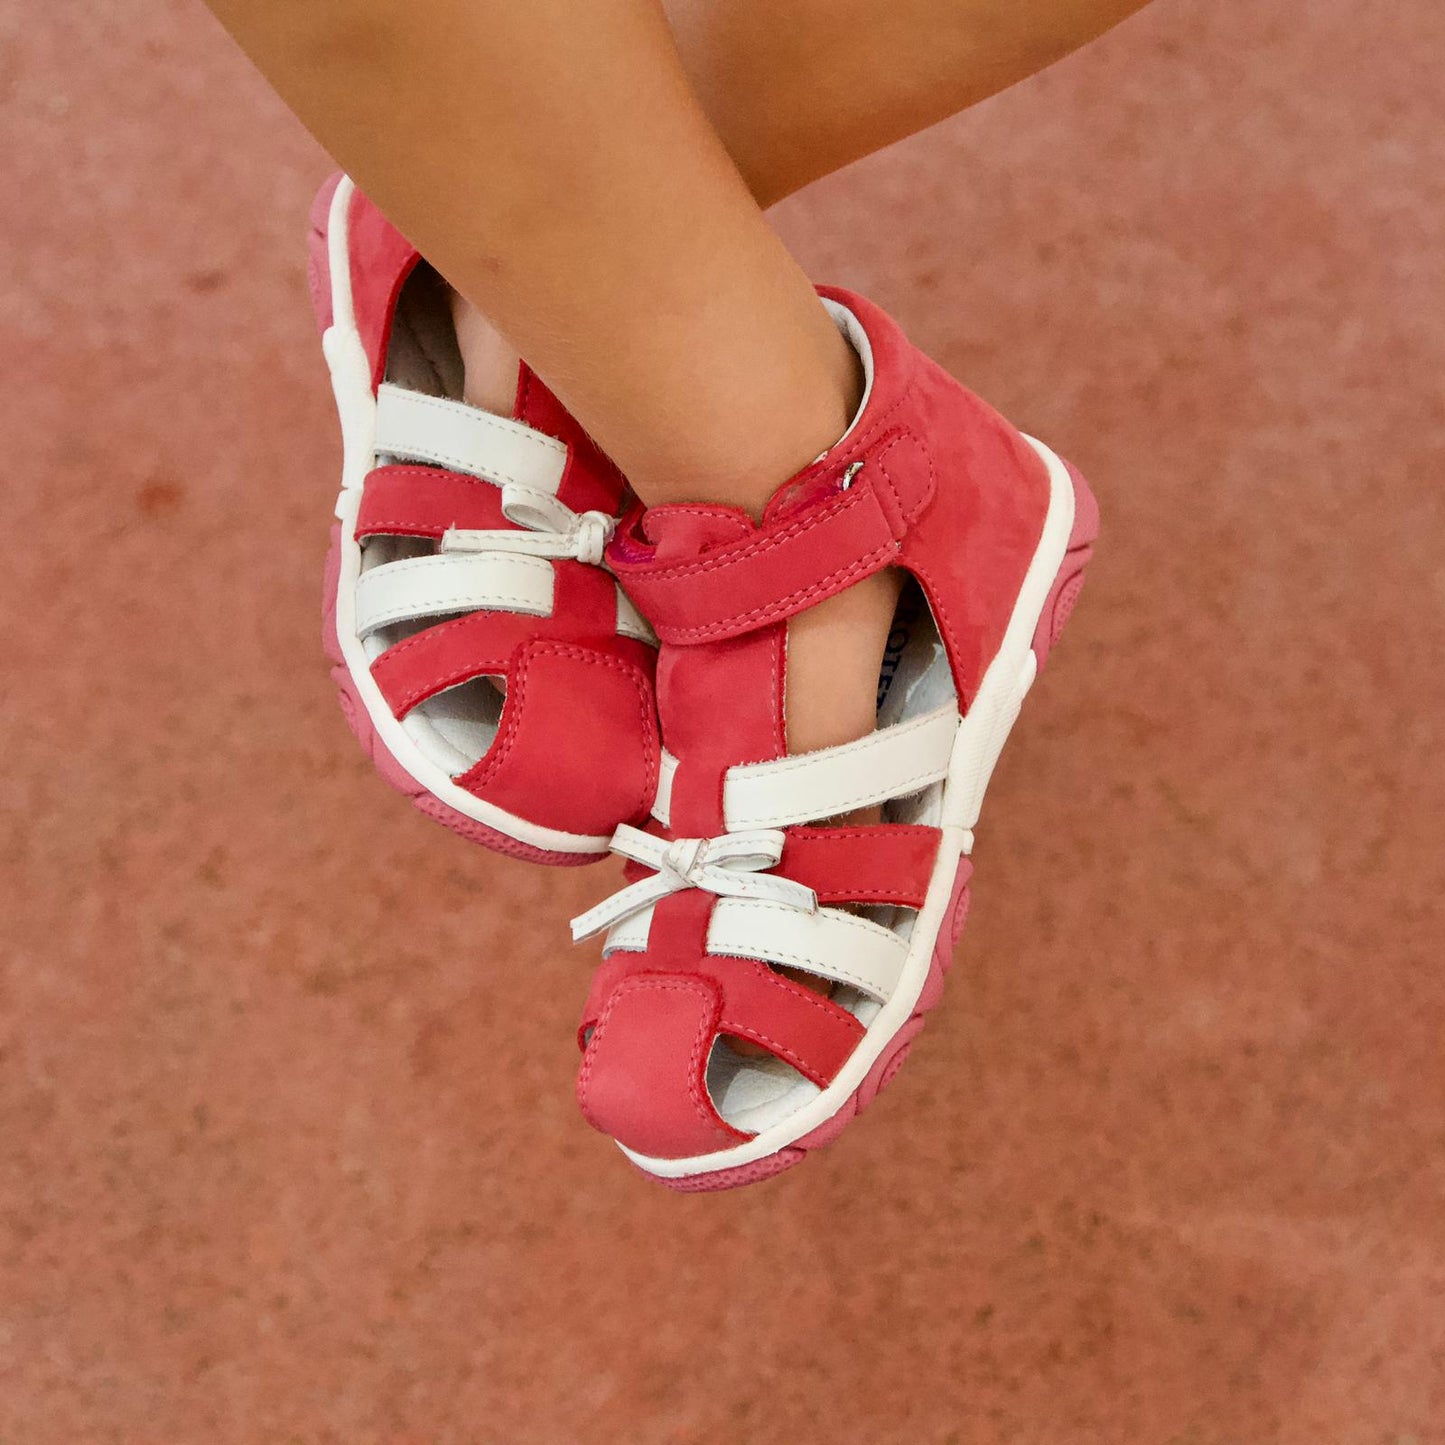 KAREN rosa toddler girl arch support sandals